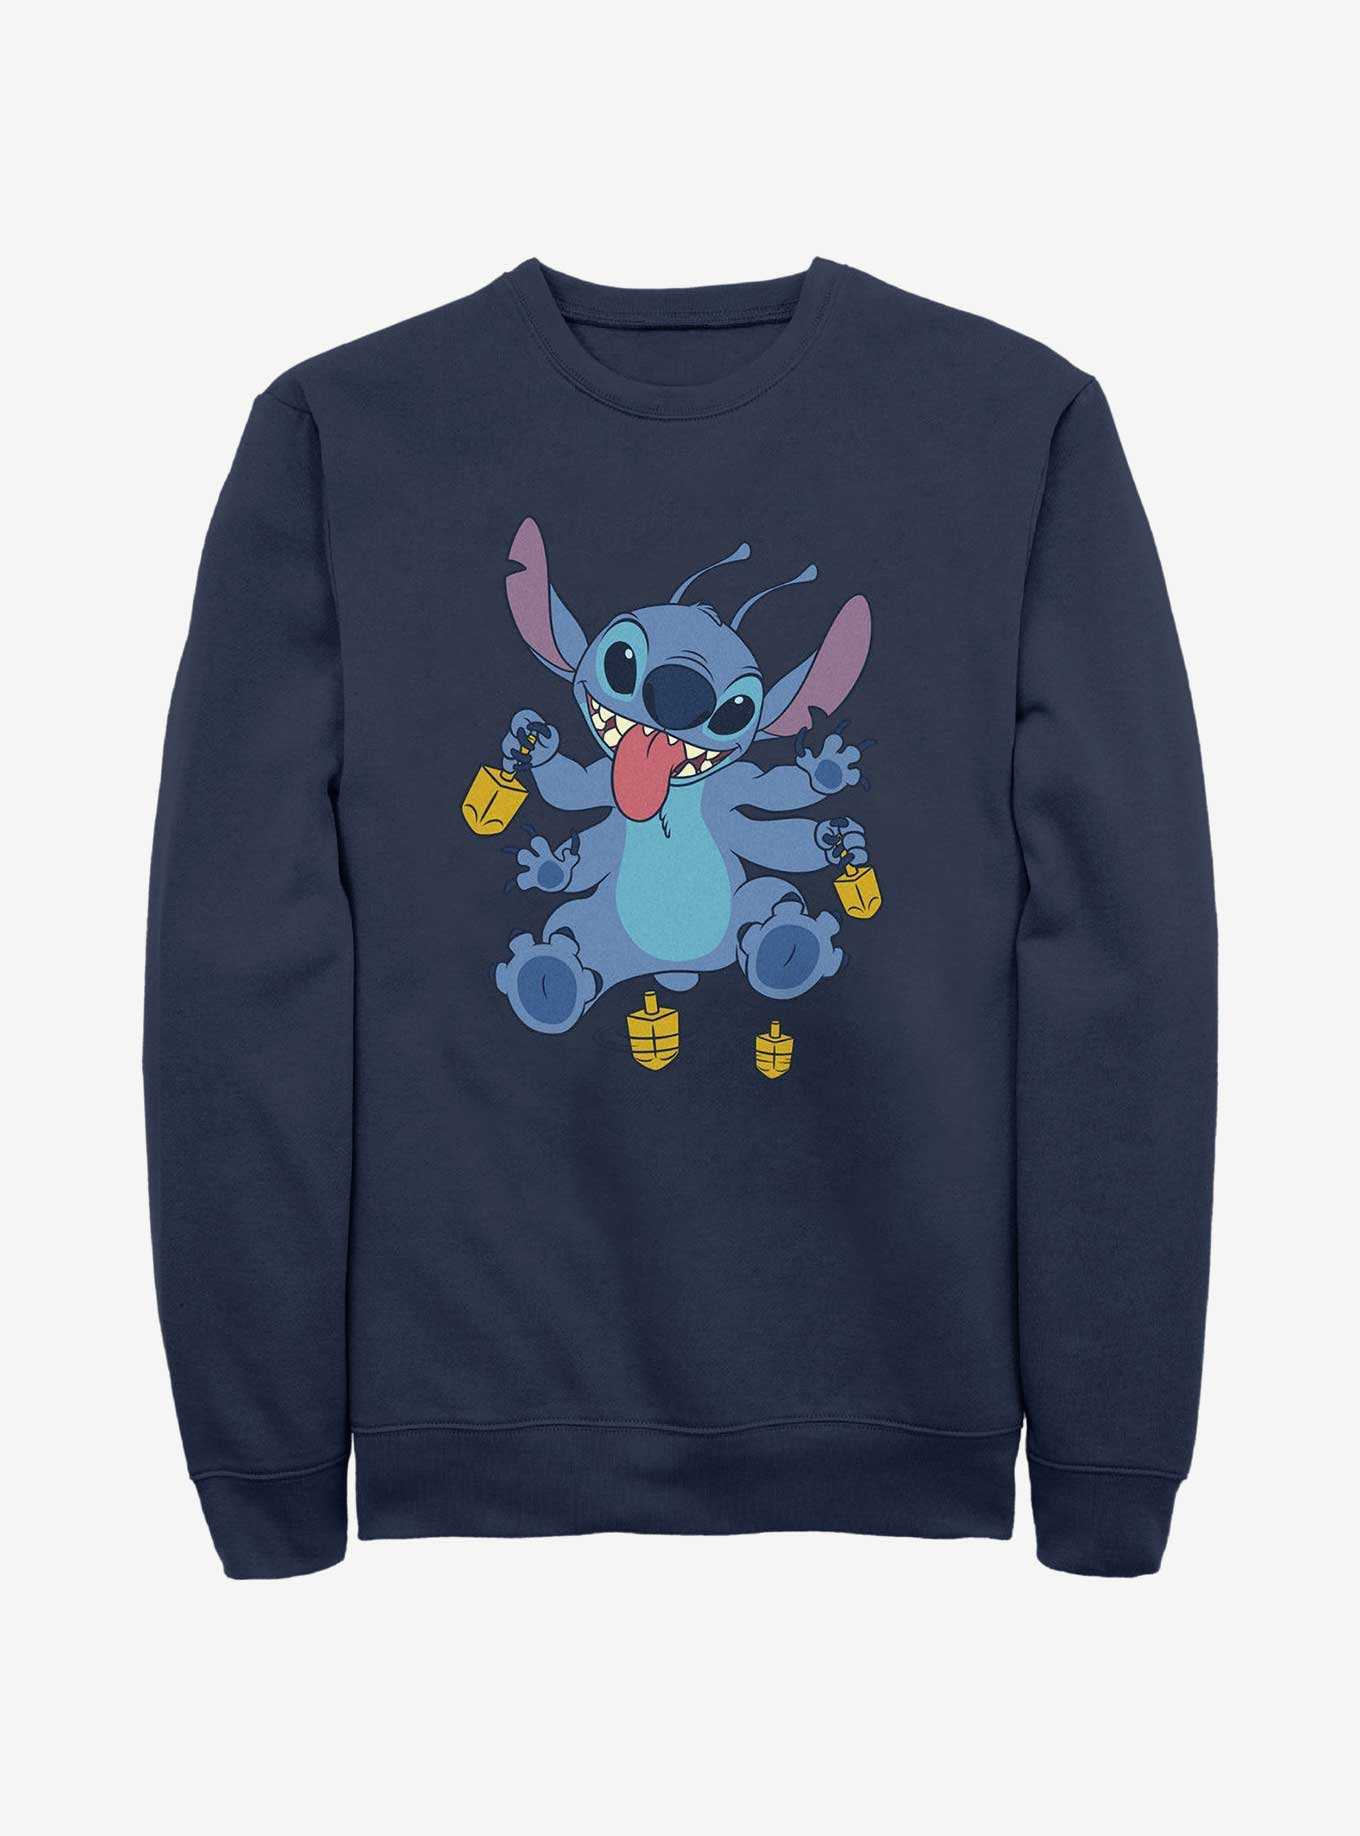 Disney Lilo & Stitch Hanukkah Spinning Dreidels Sweatshirt, , hi-res